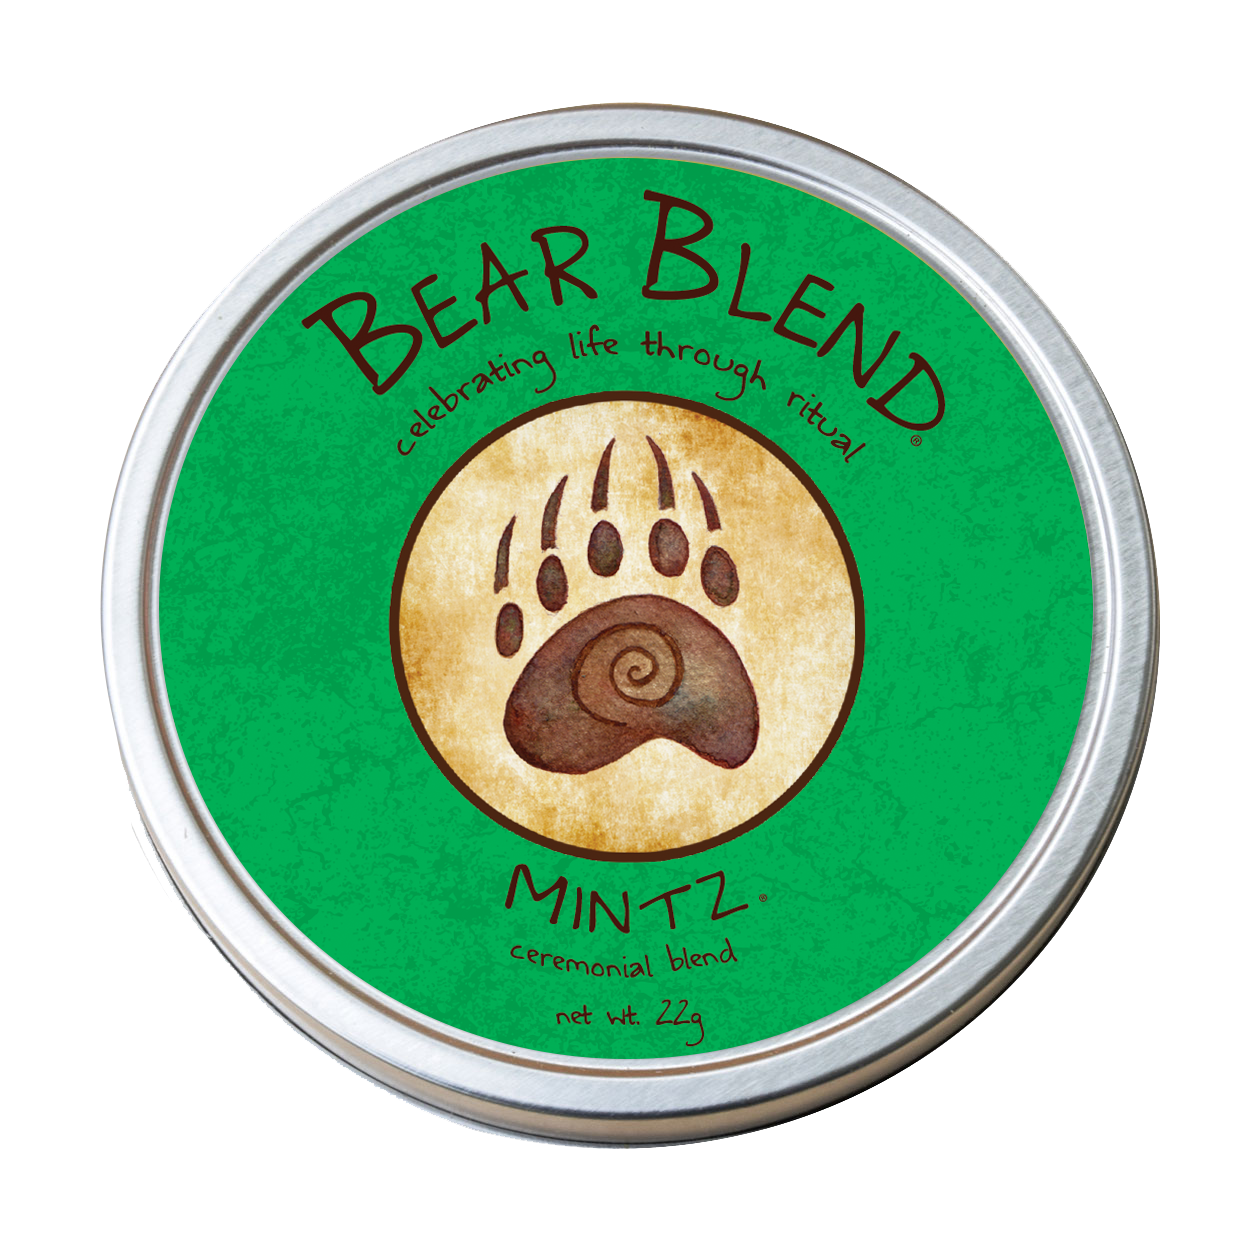 Lobelia — Smokable Herbs - Bear Blend